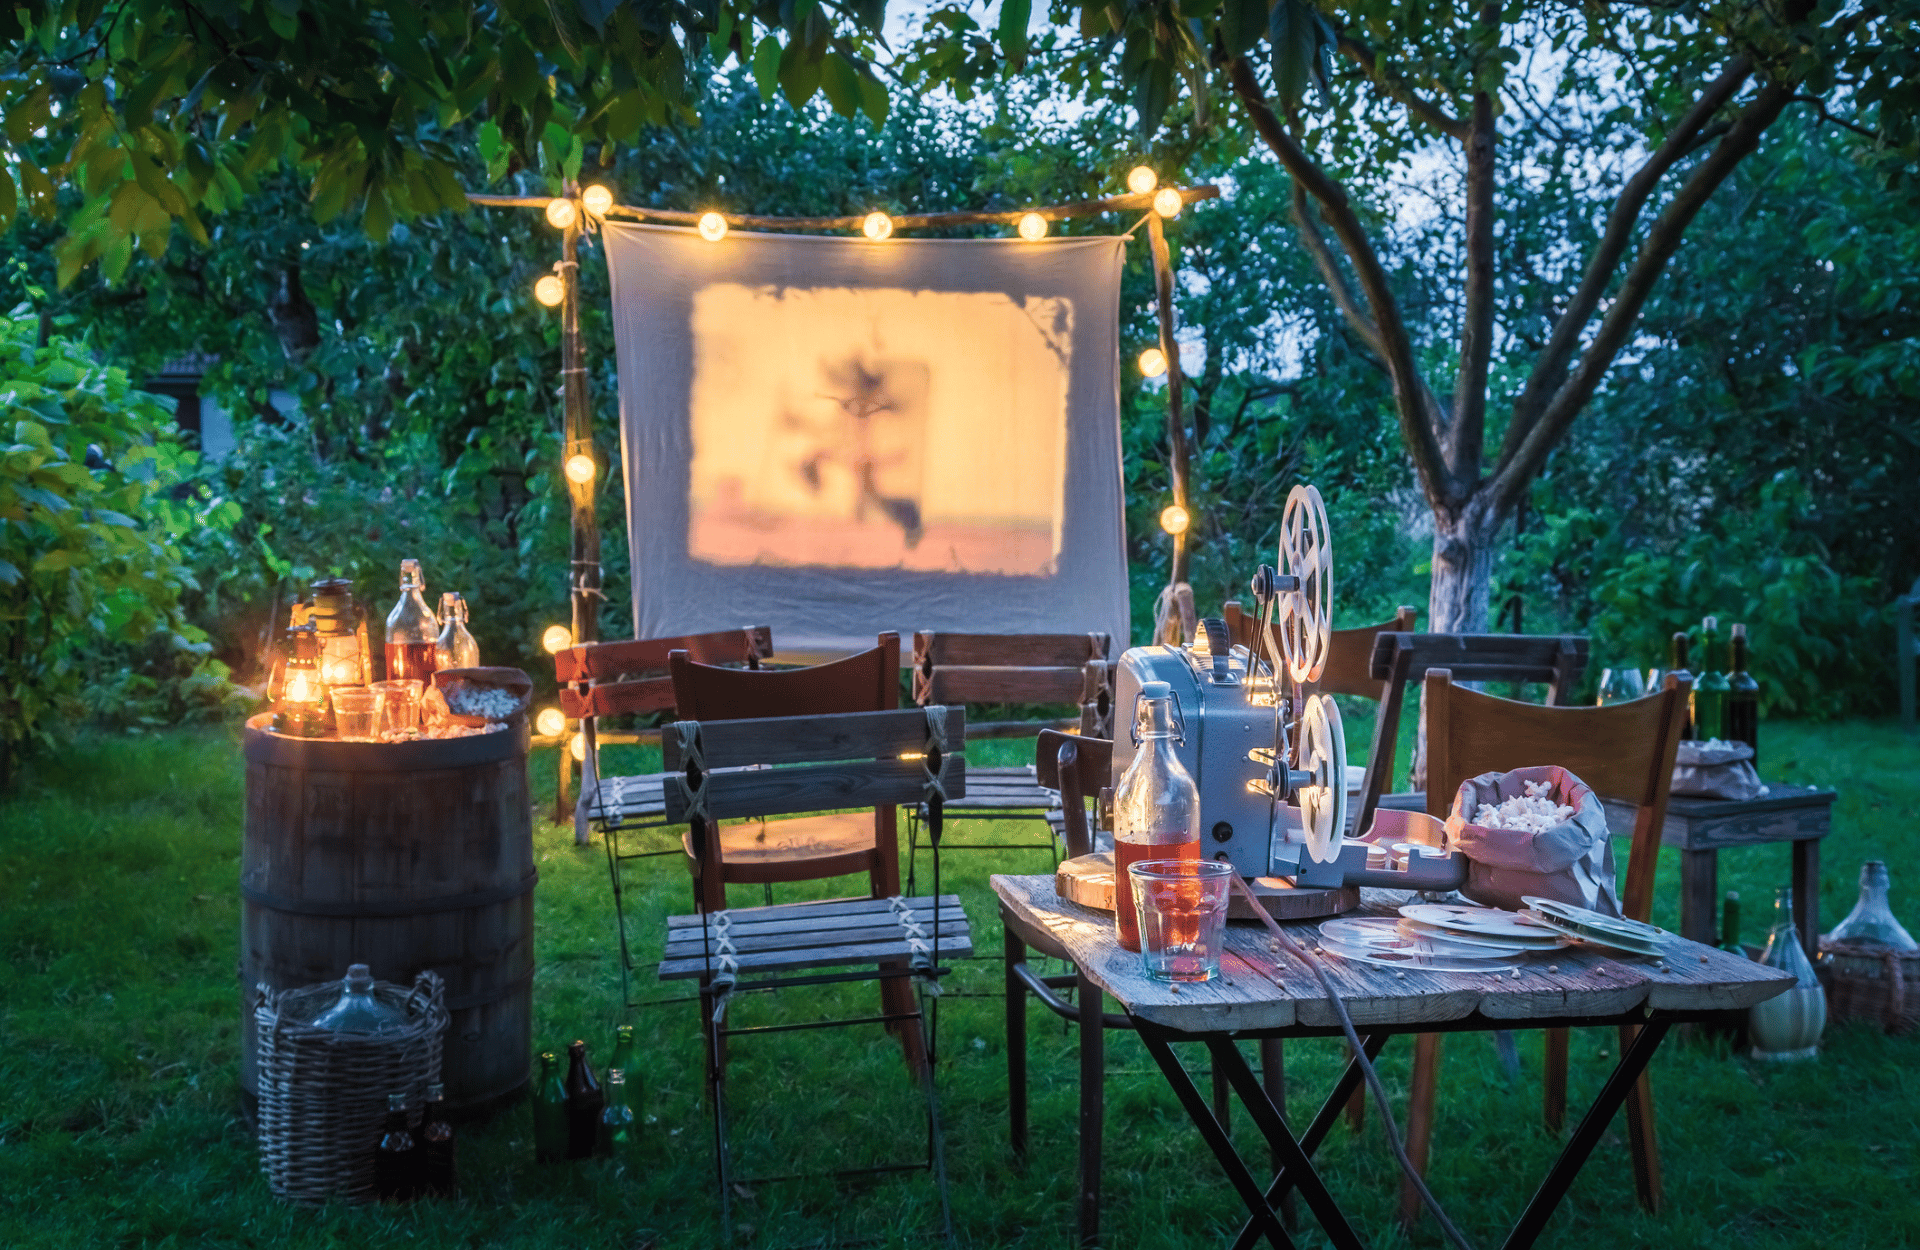 DIY outdoor cinema inspiration